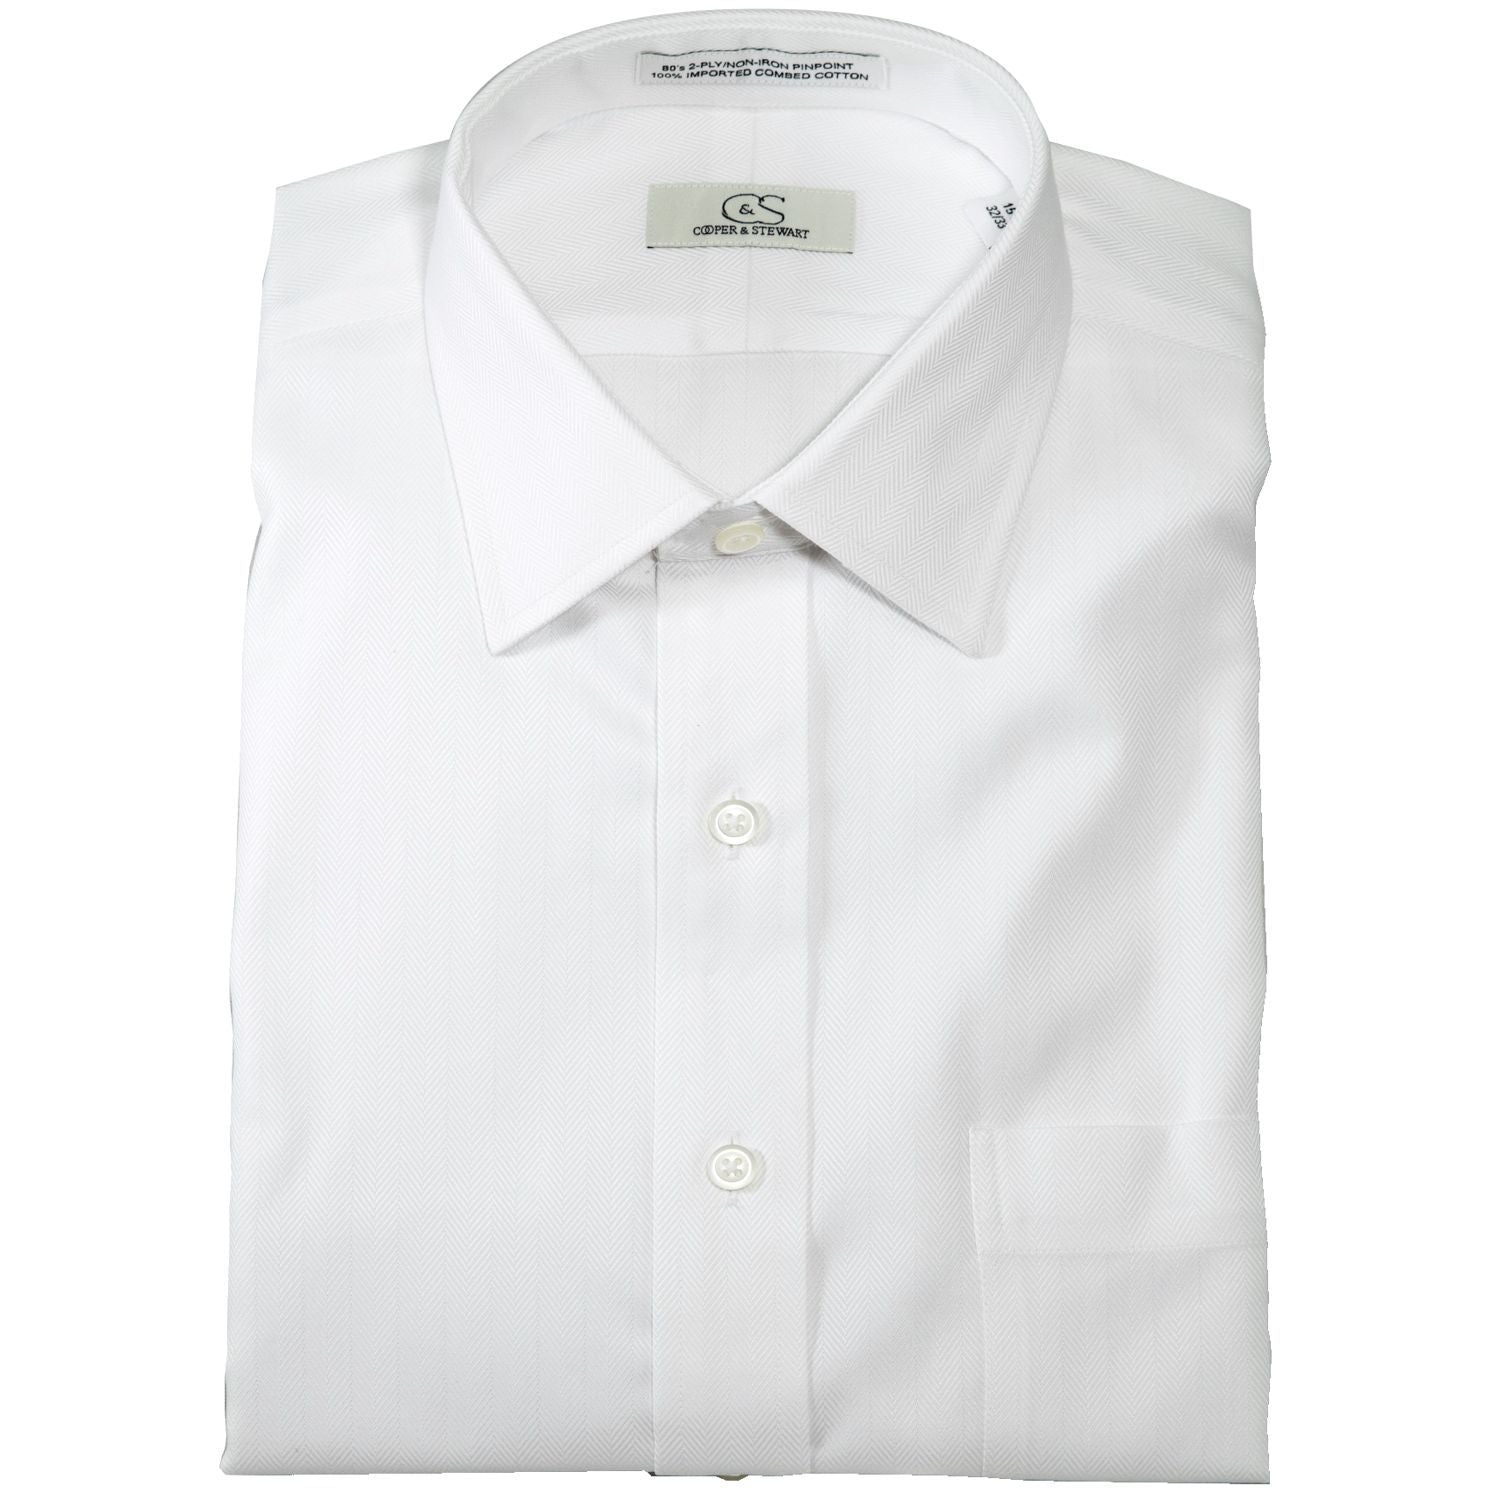 The Charleston - Wrinkle-Free Herringbone Cotton Dress Shirt in White by Cooper & Stewart